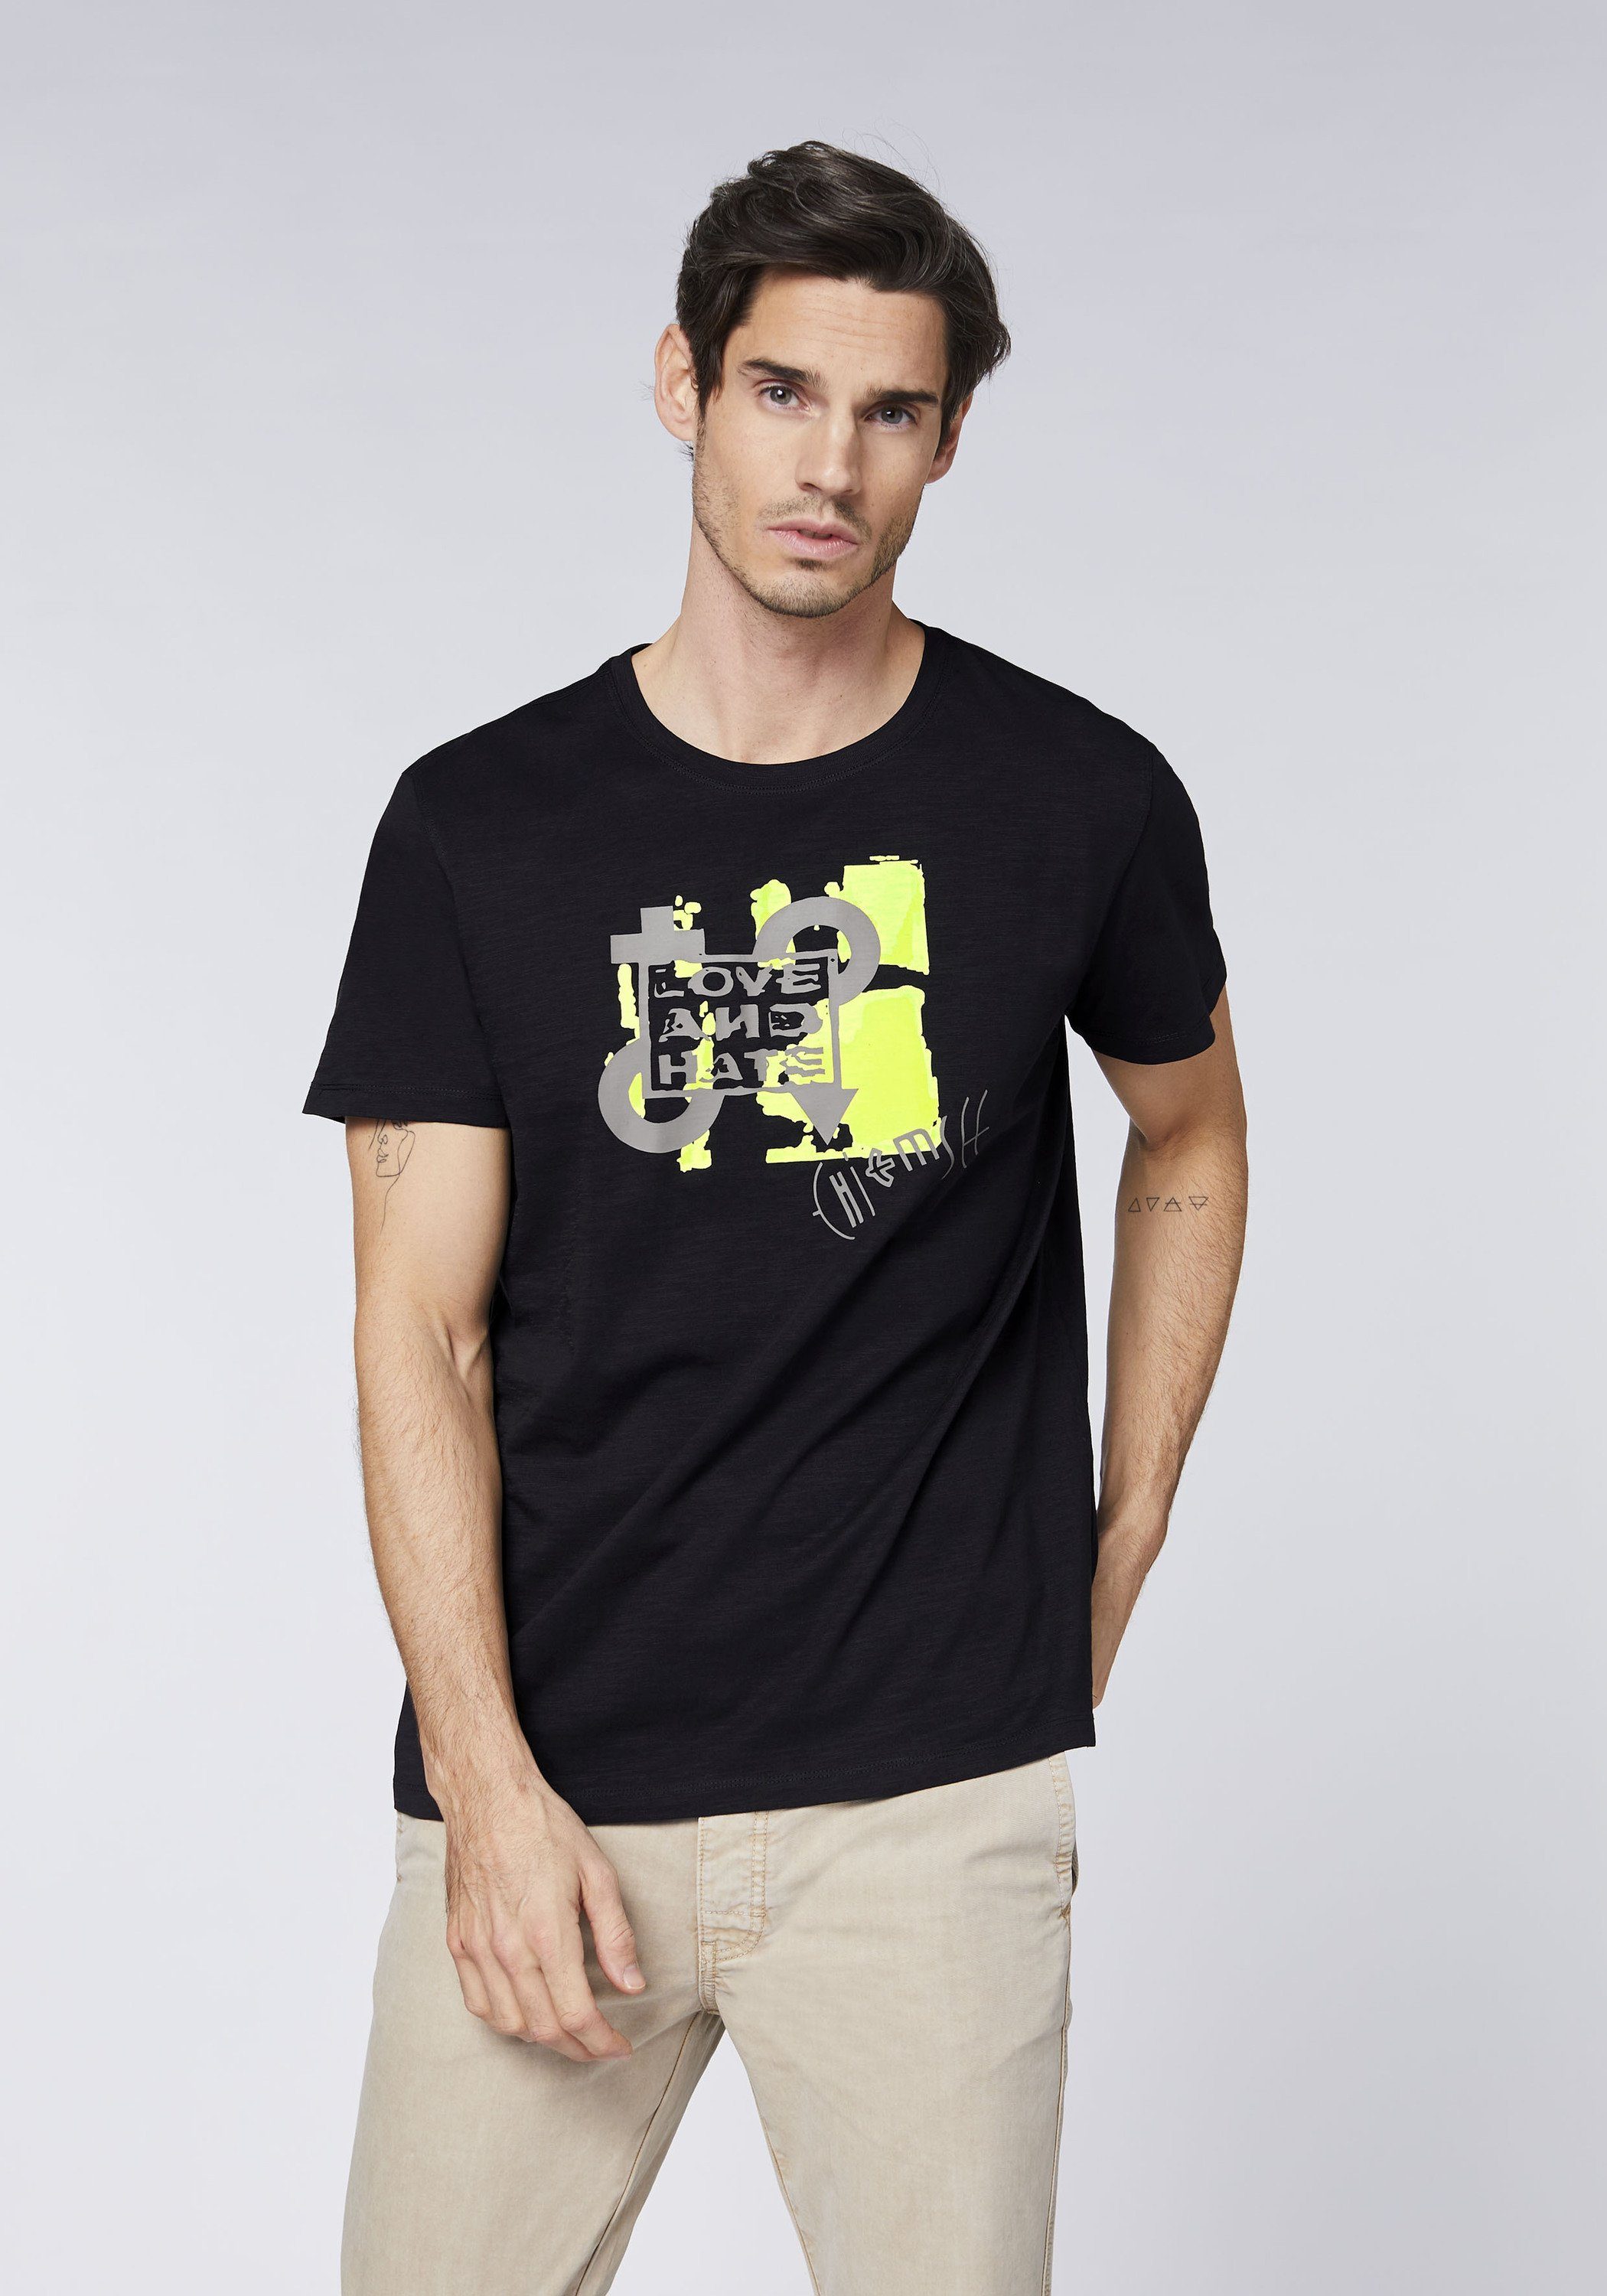 Chiemsee Print-Shirt Black T-Shirt Deep